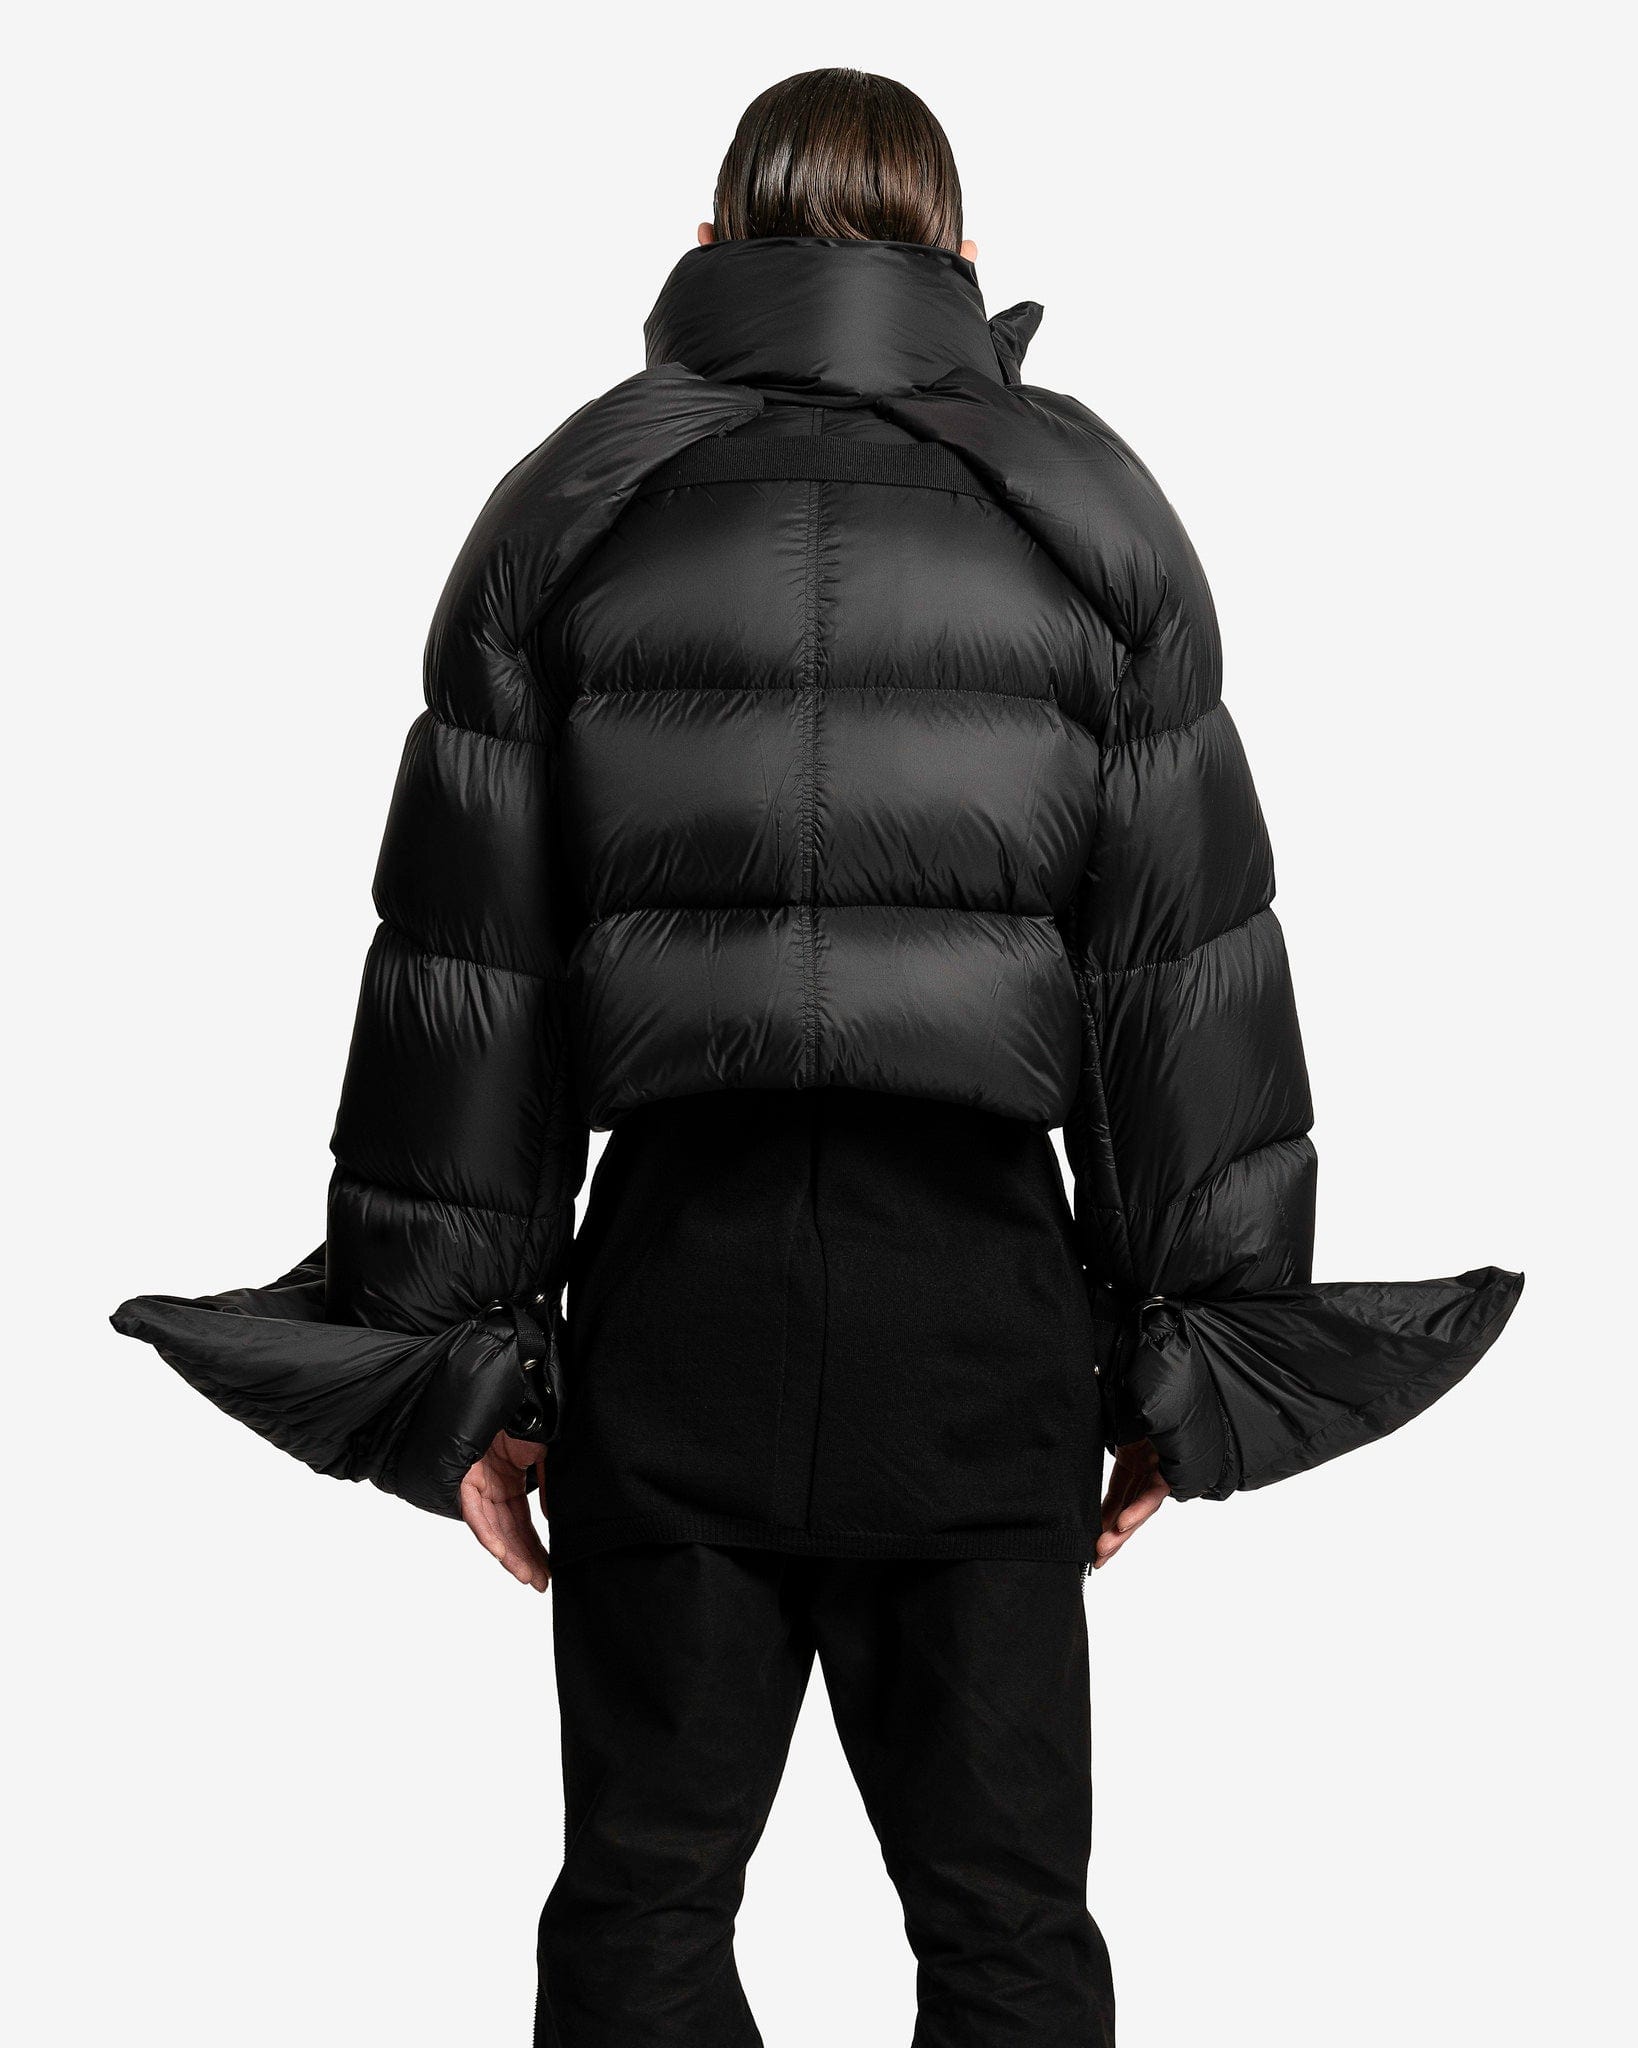 Babel Mountain Duvet Cropped Jacket in Black